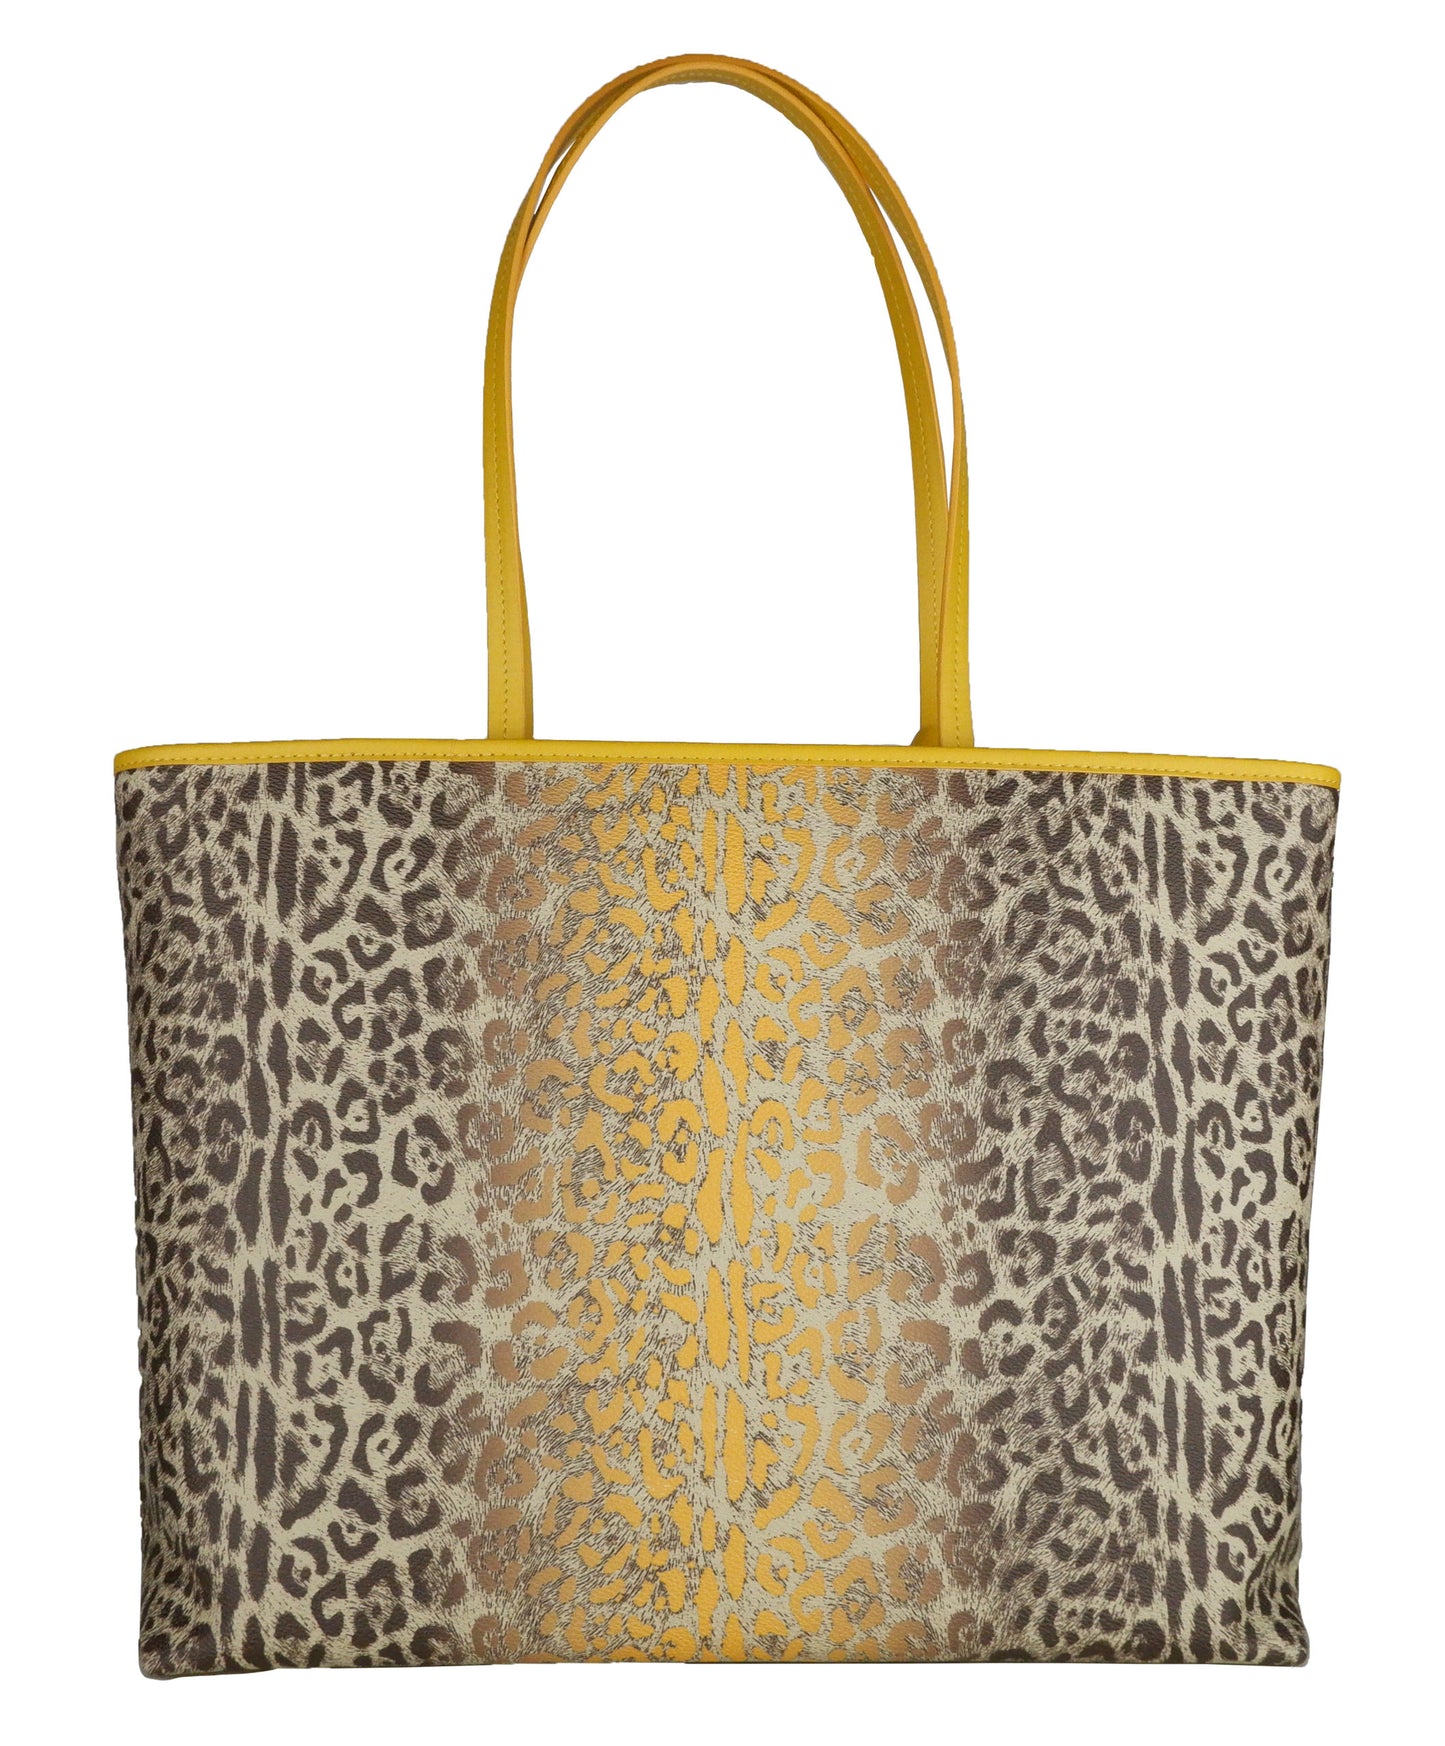 Yellow Pvc Leopard Texture Shopping Handbag